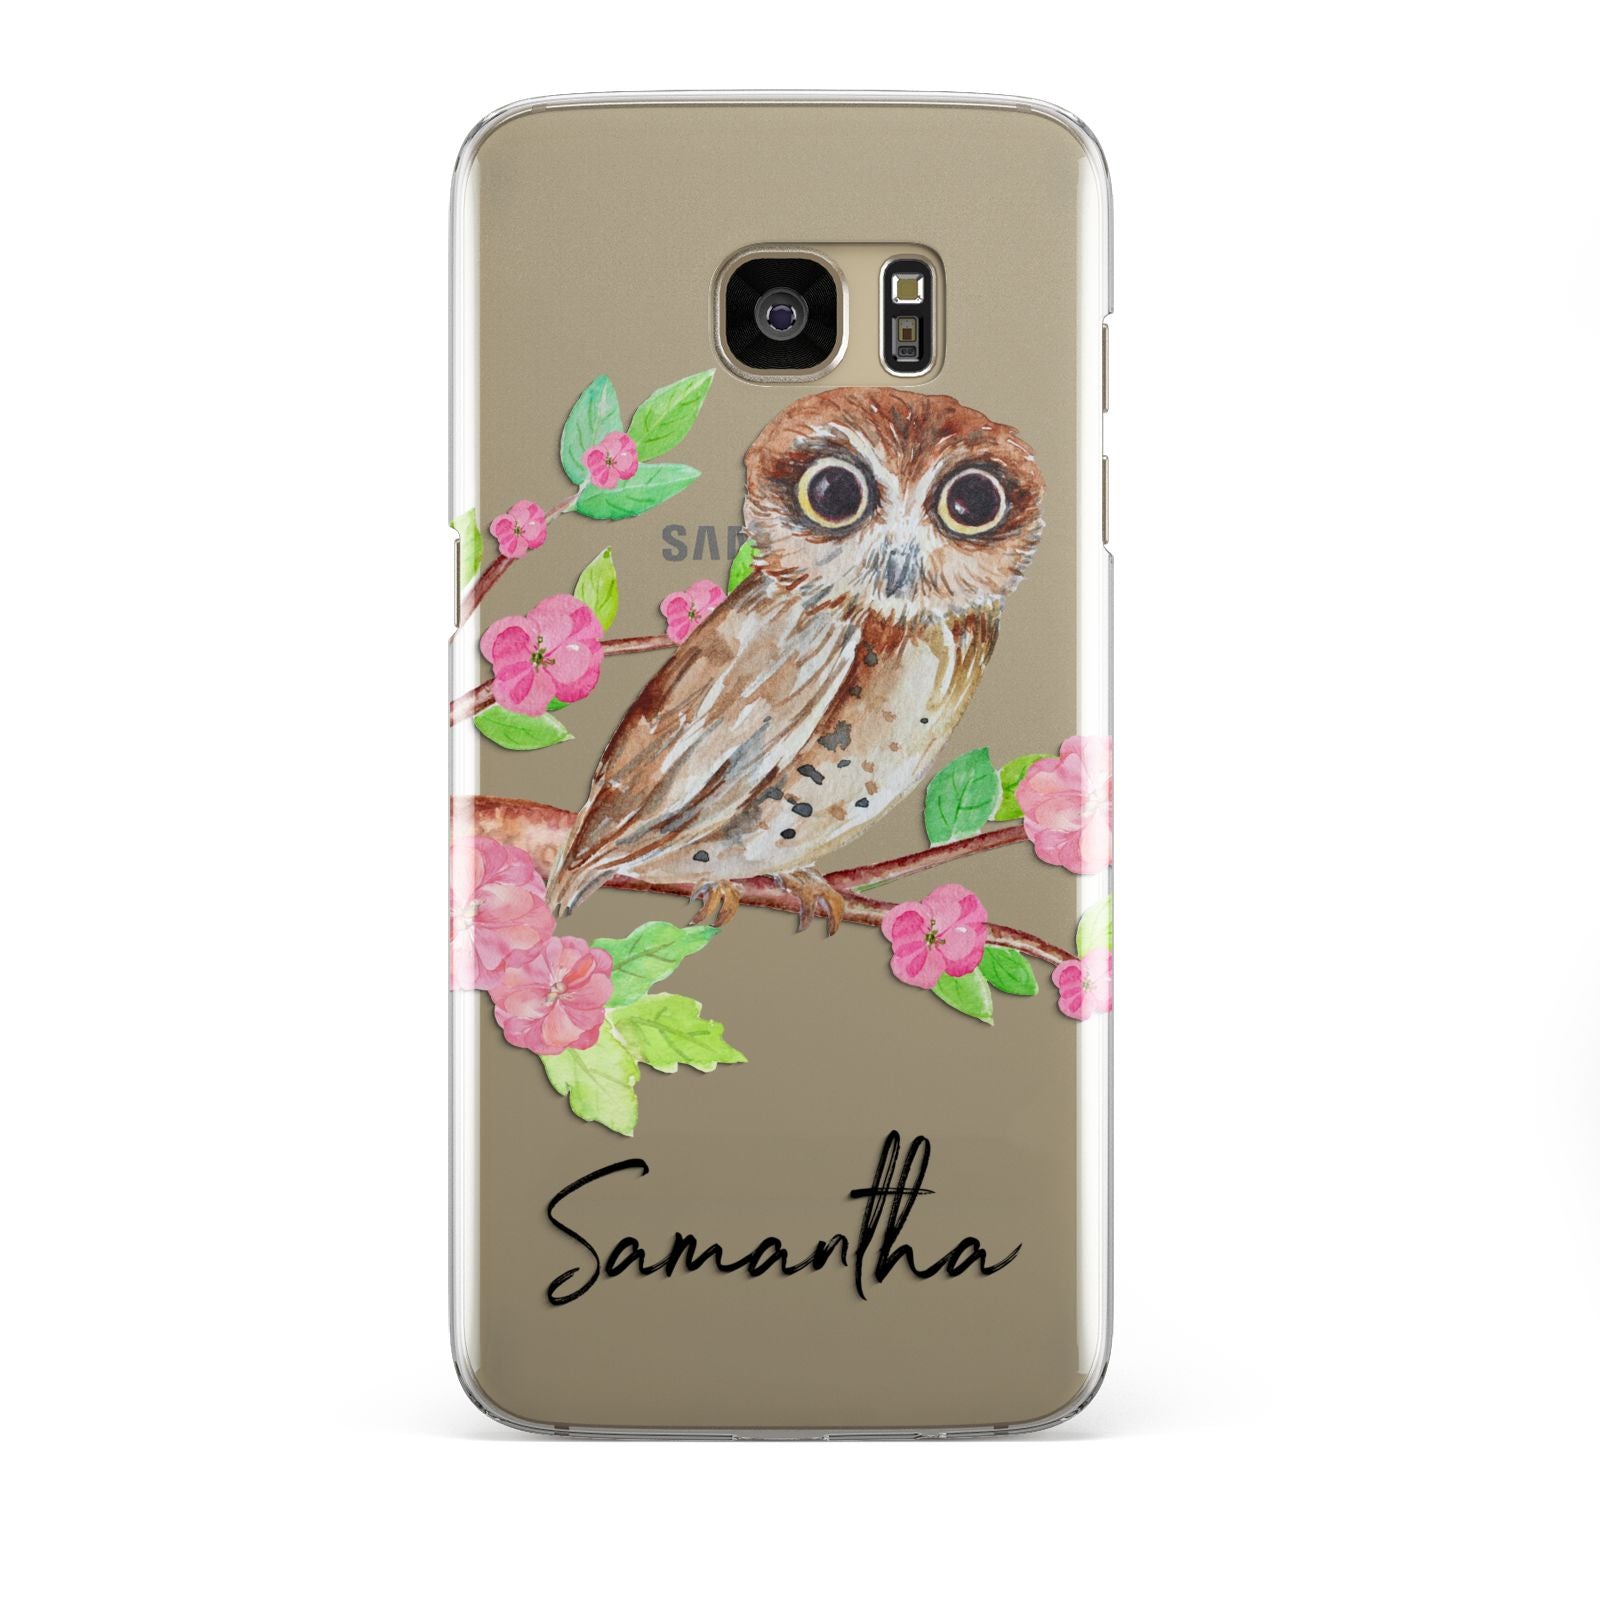 Personalised Owl Samsung Galaxy S7 Edge Case